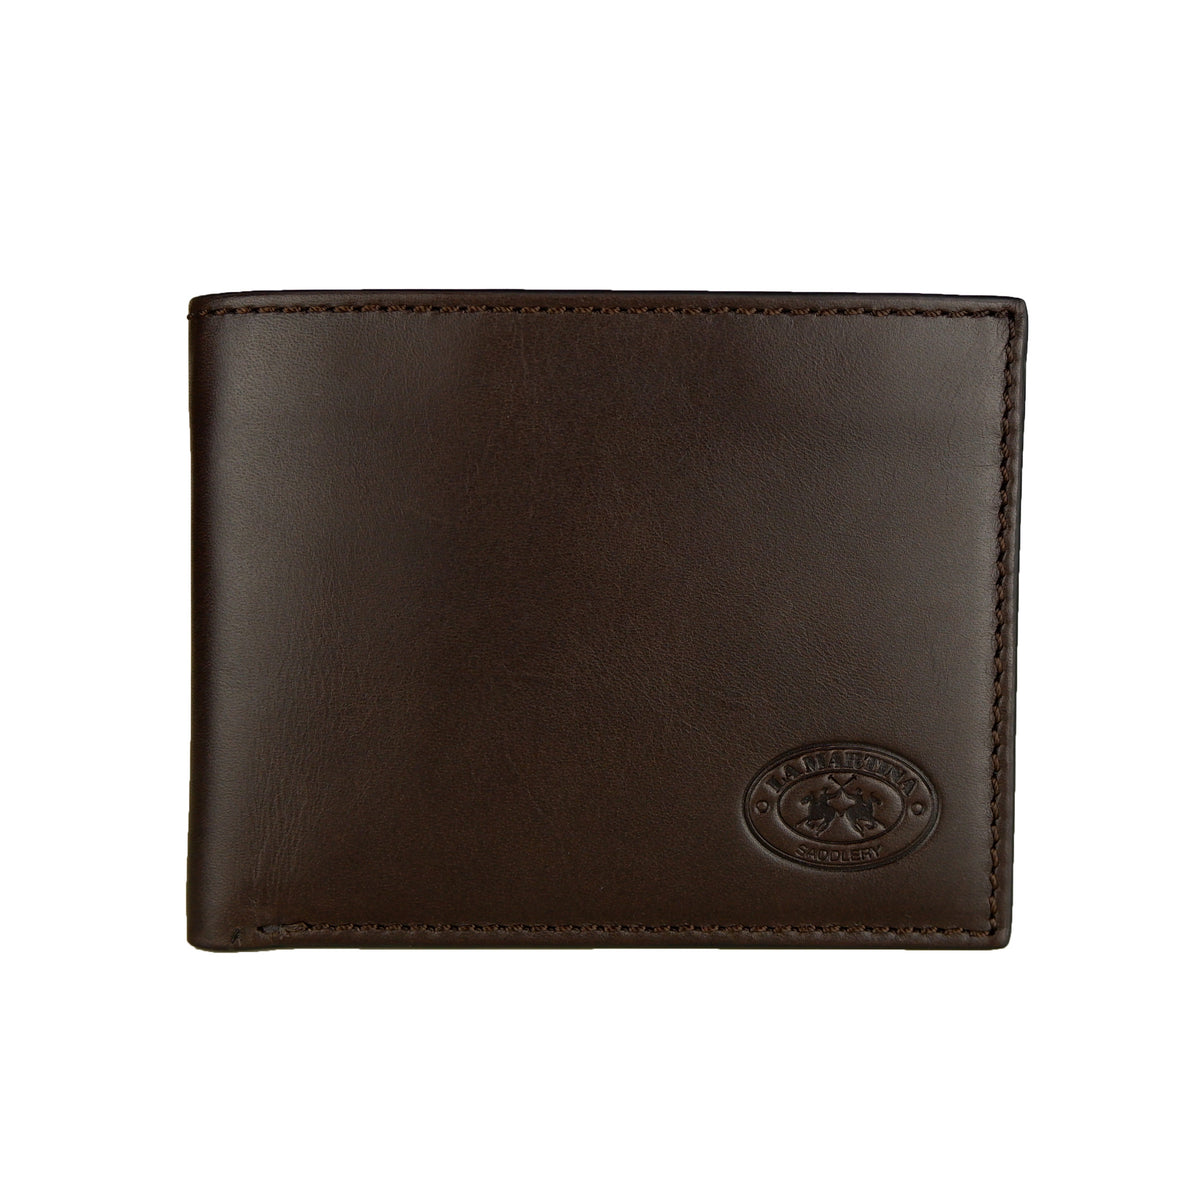 La Martina Men's Wallet -Dark Brown Leather with Logo